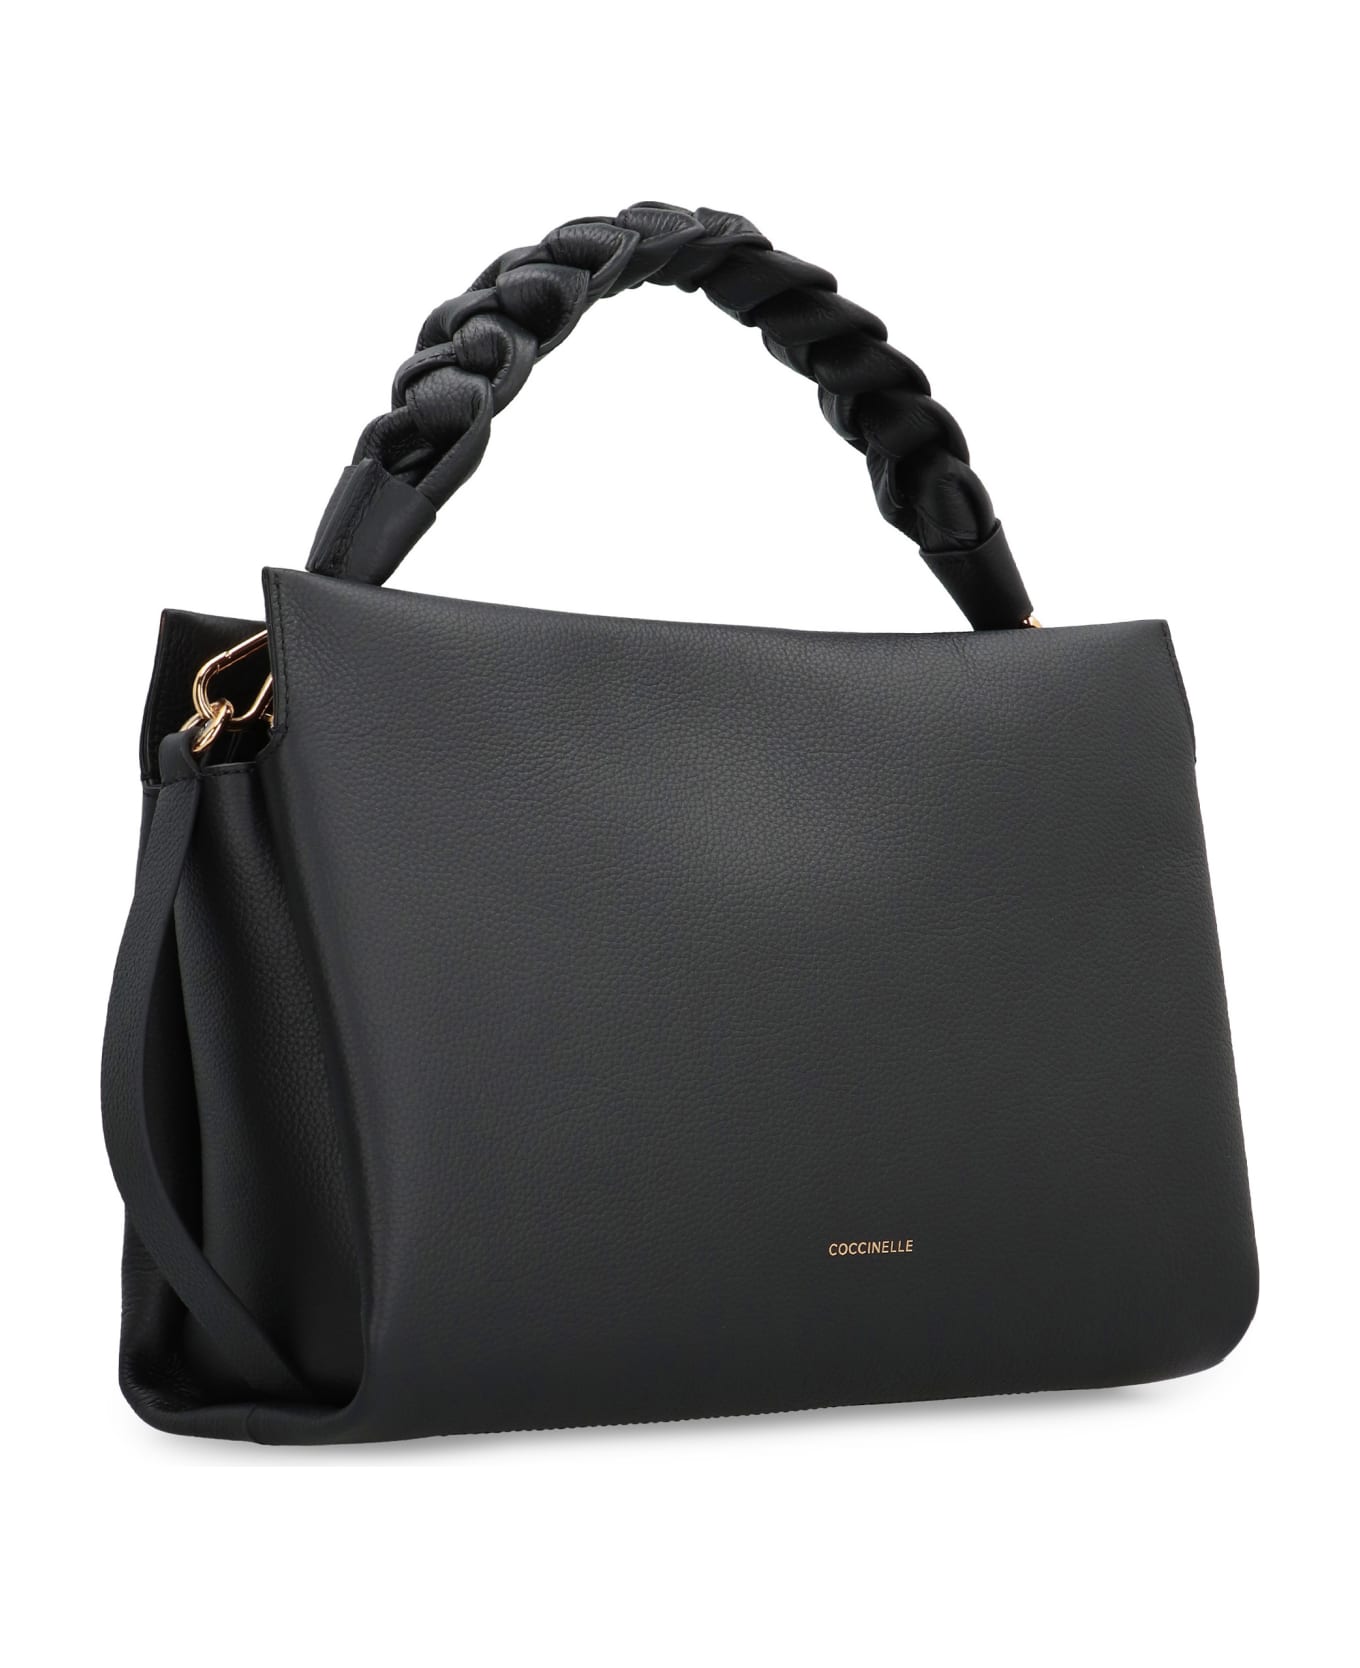 Coccinelle Boheme Leather Handbag - black